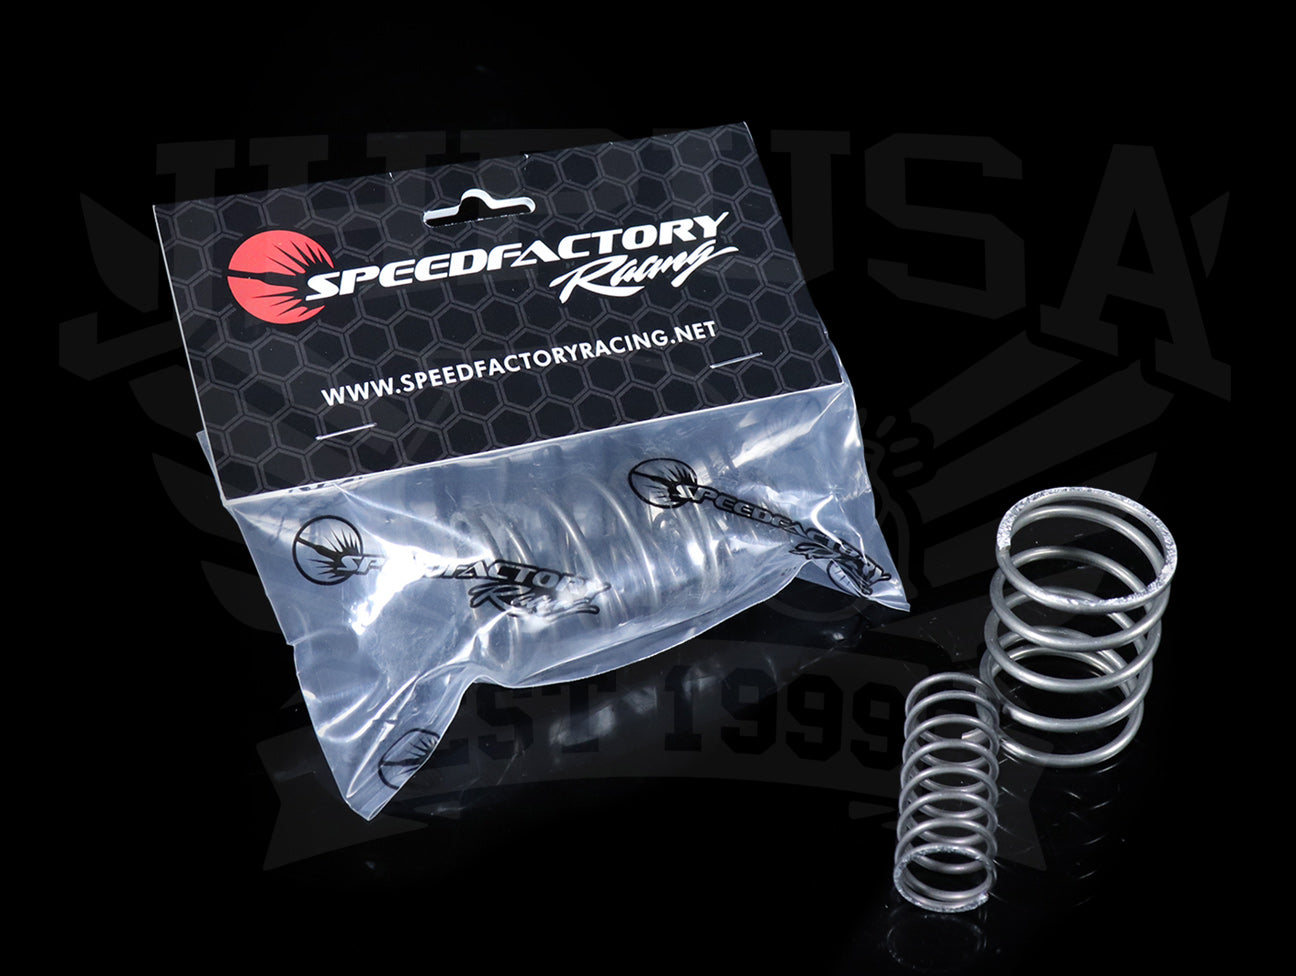 SpeedFactory Racing Heavy Duty Detent Spring Kit – SpeedFactoryRacing